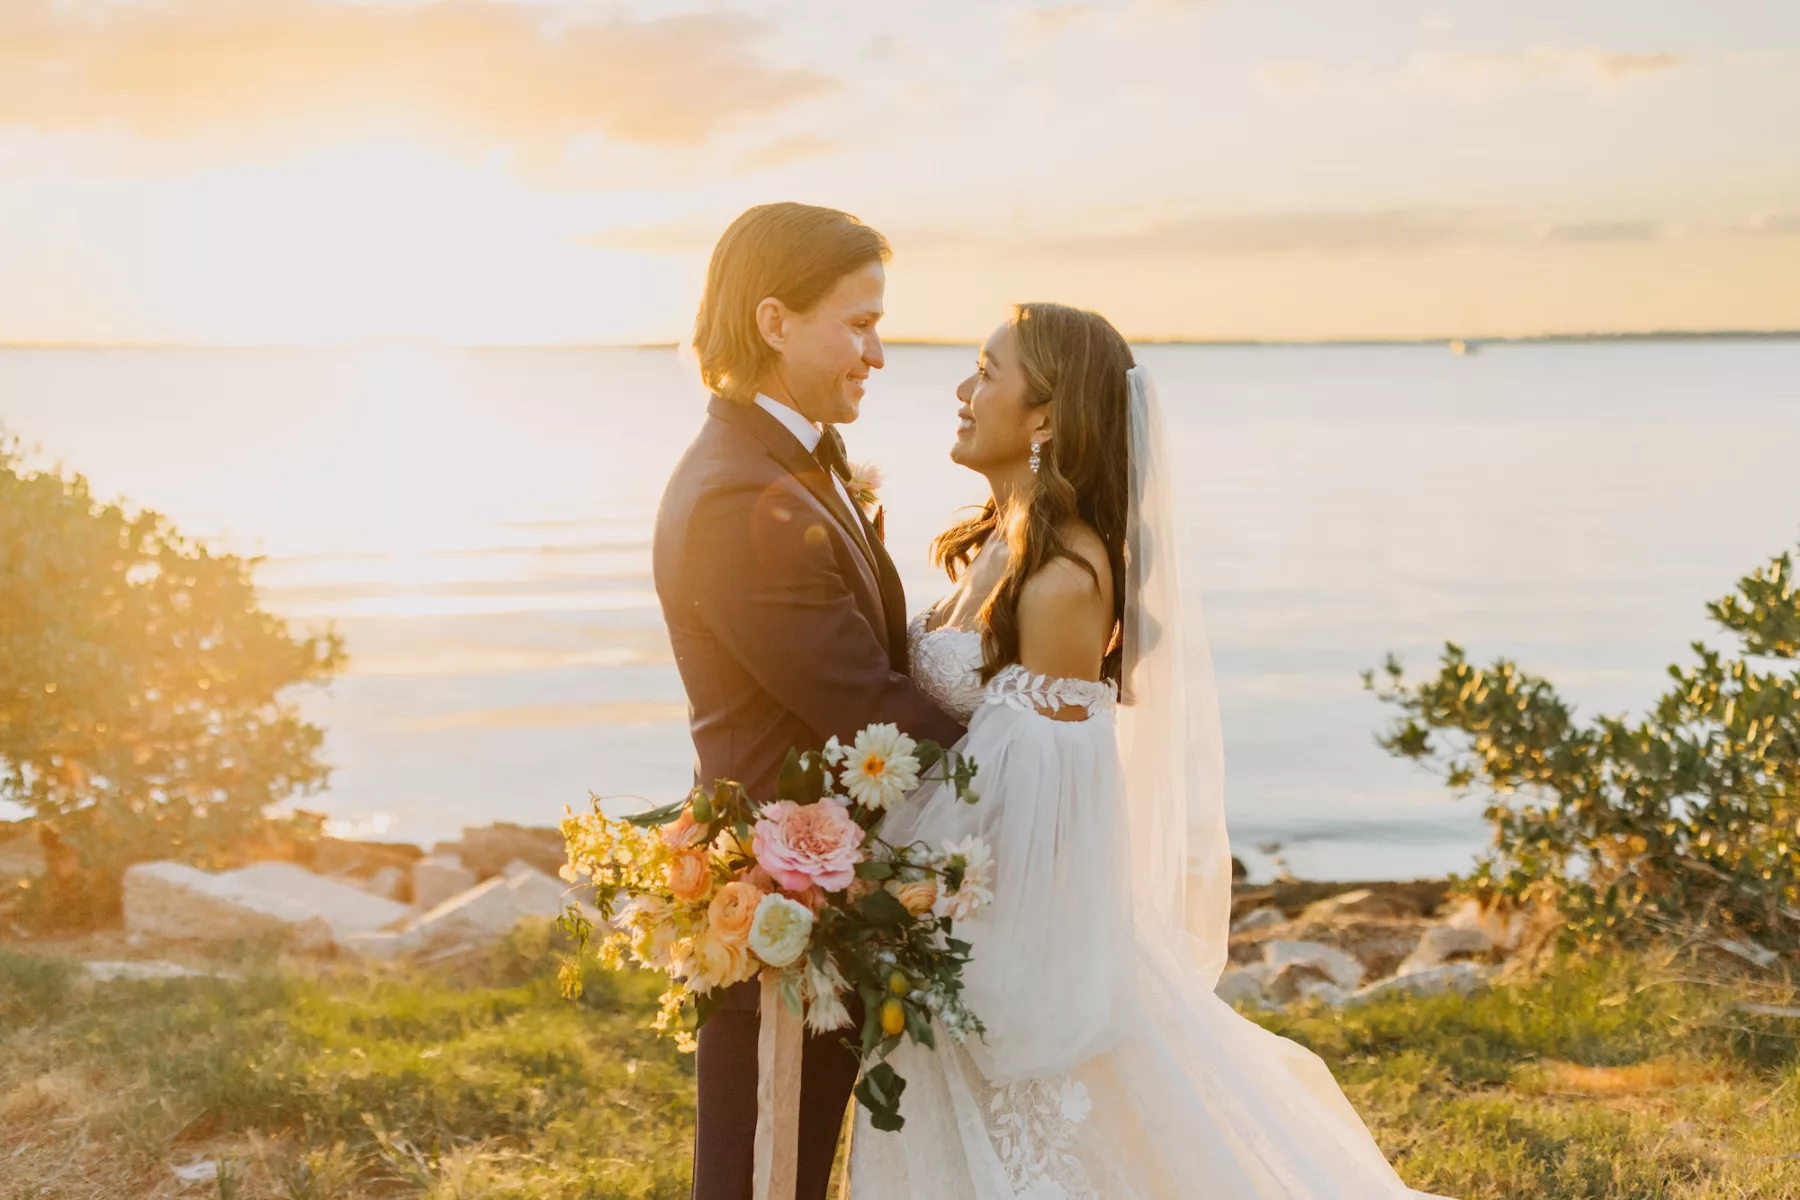 Romantic Sunset Bride and Groom Wedding Portrait | Tampa Bay Photographer Amber McWhorter Photography | Planner Coastal Coordinating